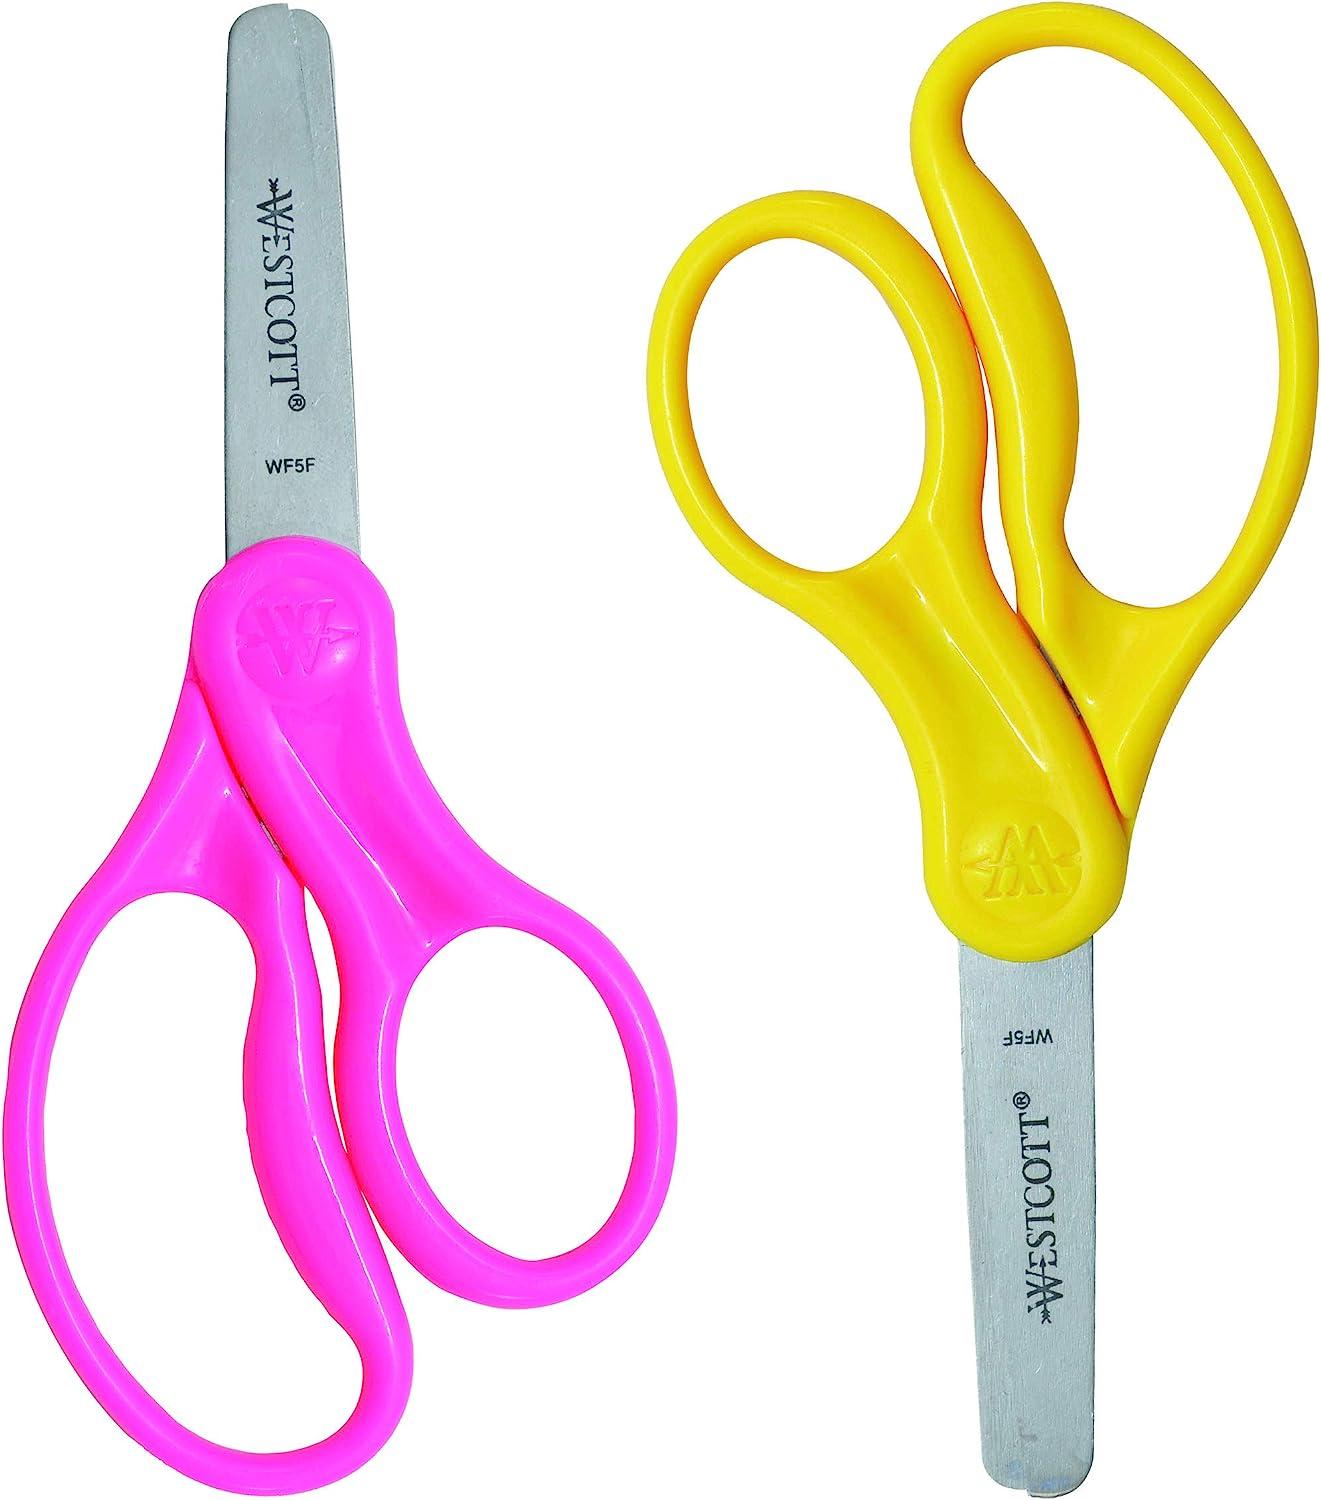 Kids Scissors, Small Safety Scissors, Blunt Tip Toddler Scissors